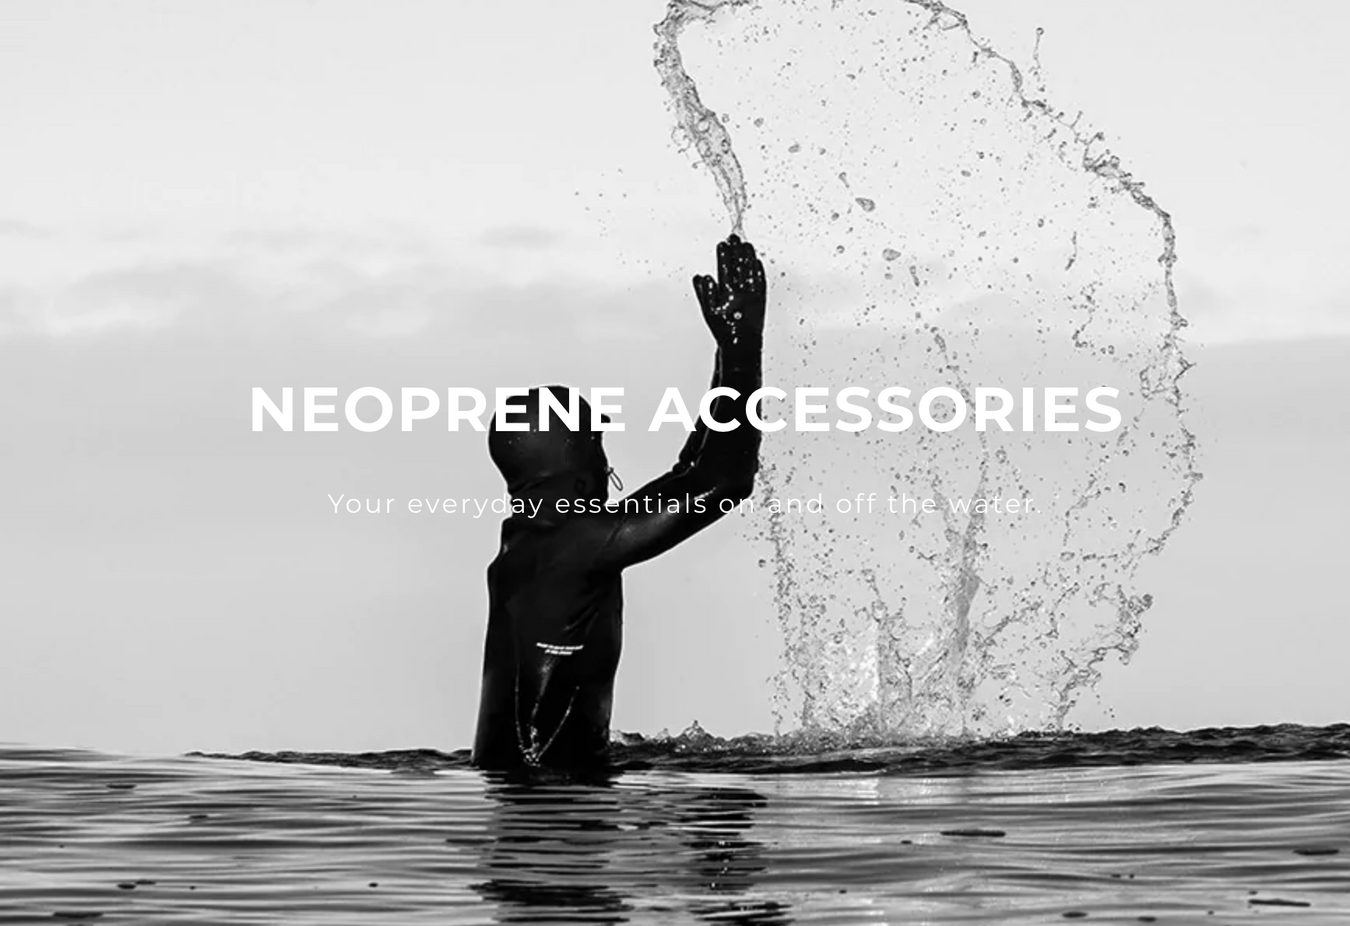 wetsuit accessories